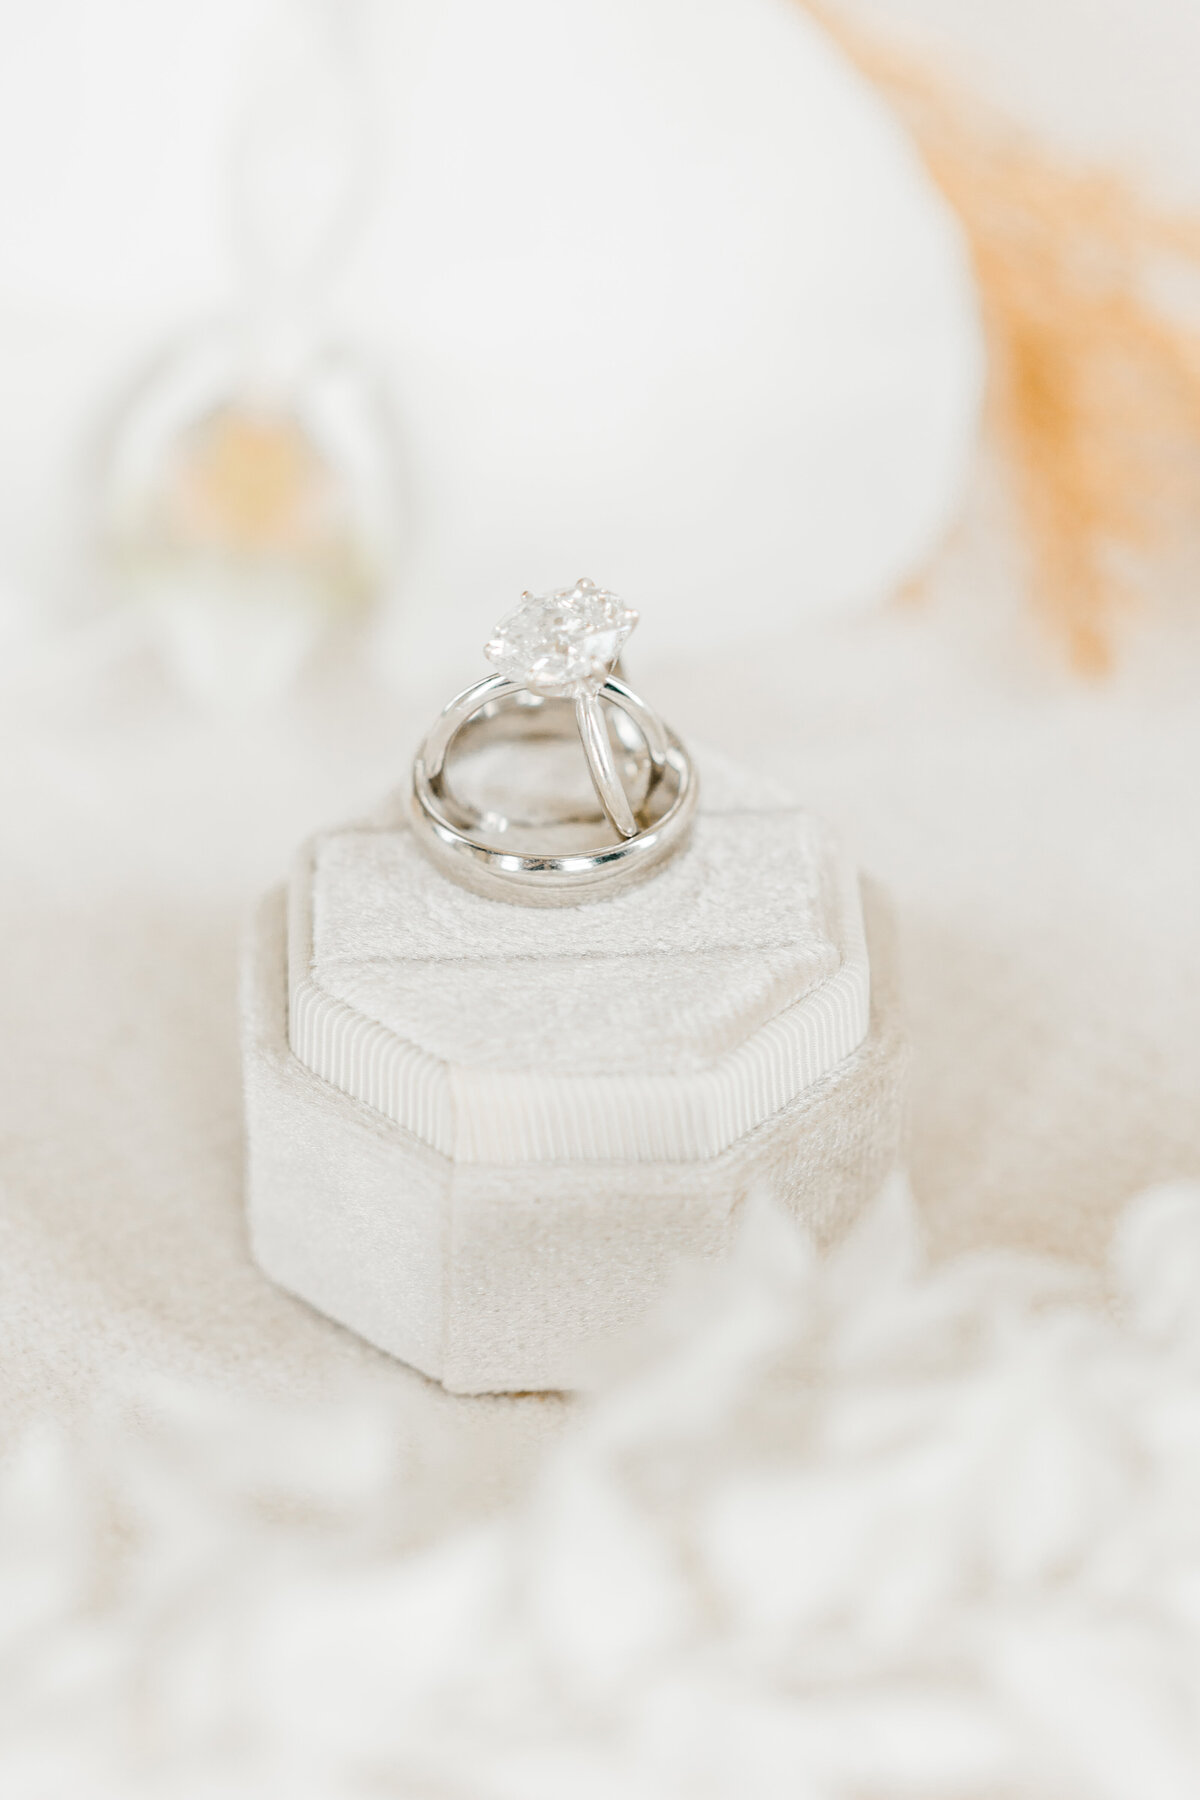 engagement ring and wedding bands on velvet ring box